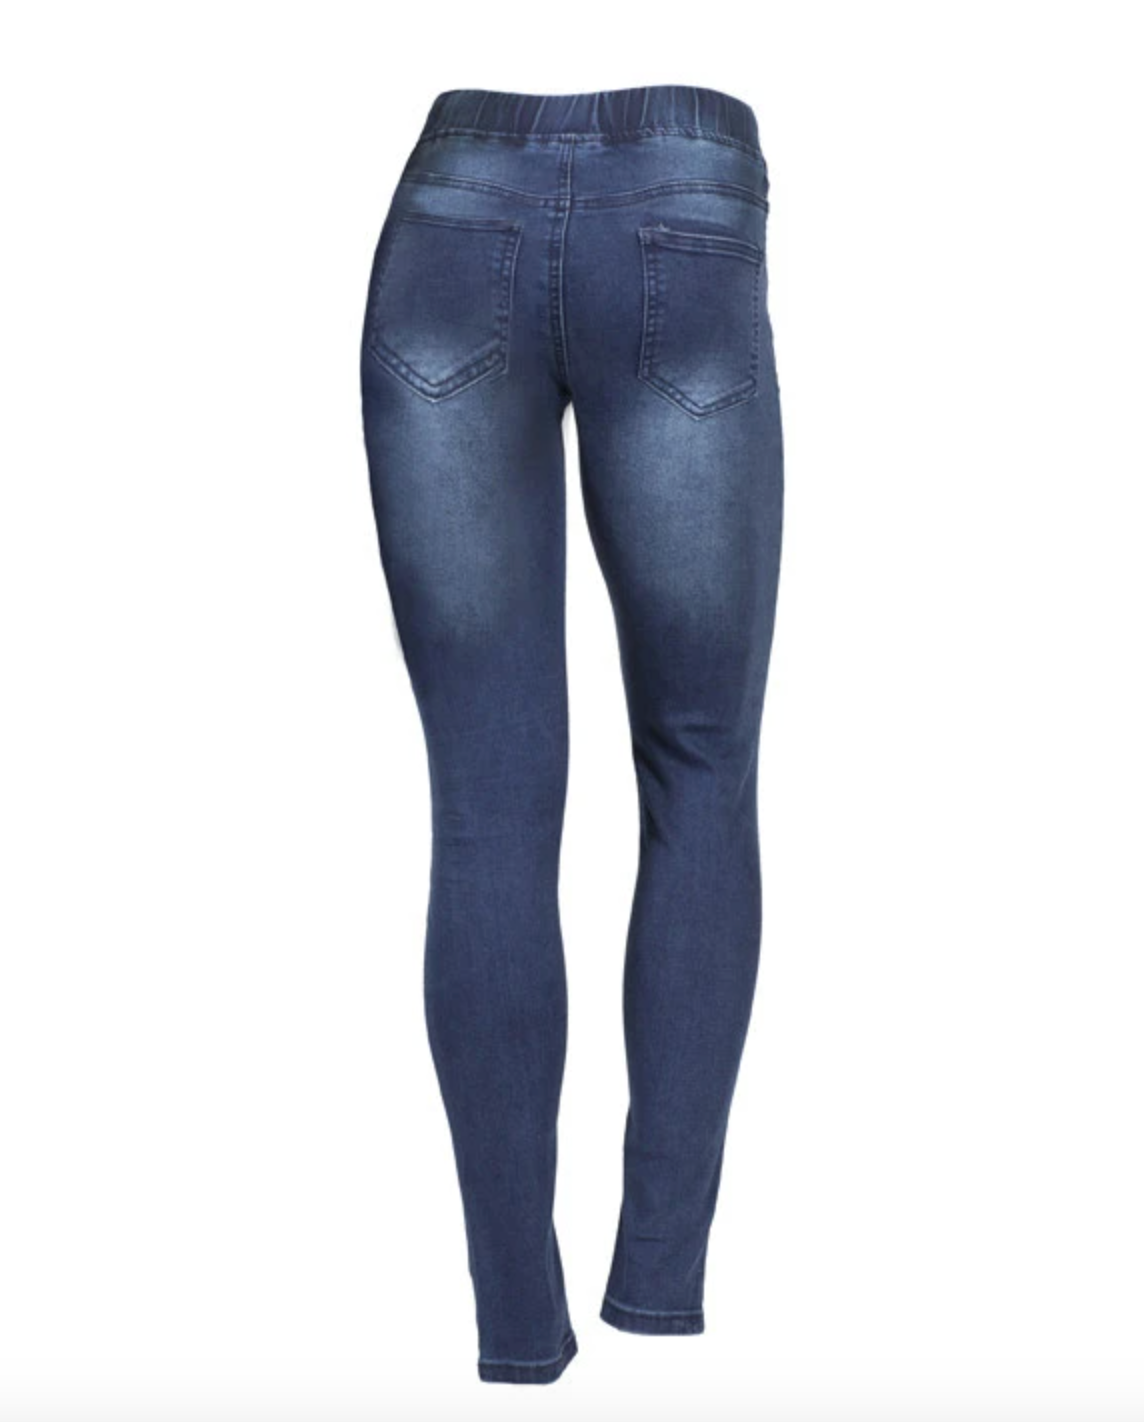 Nikki Lund-System Skinny Jeans